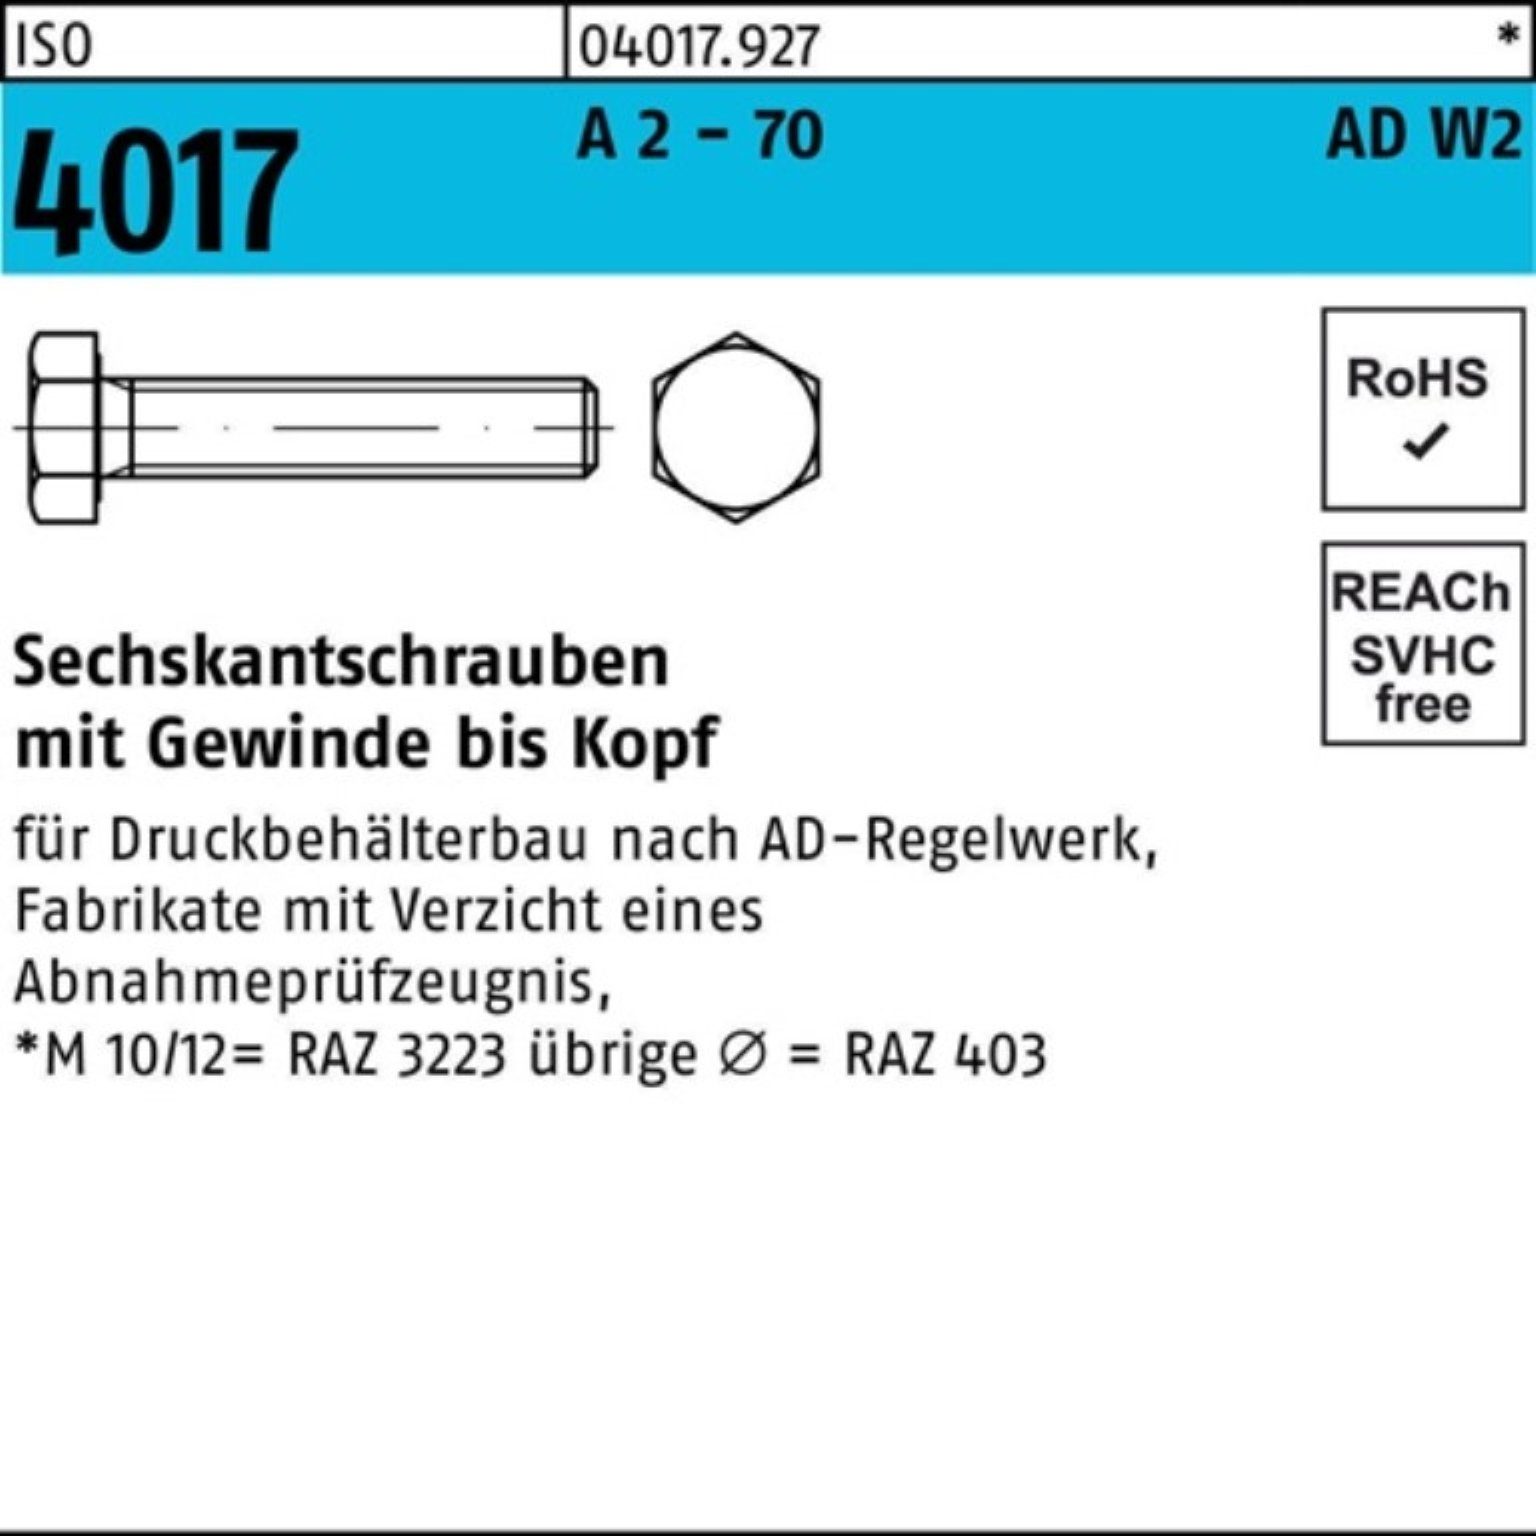 Bufab Sechskantschraube 100er Pack Sechskantschraube ISO 4017 VG M10x 45 A 2 - 70 AD-W2 100 St